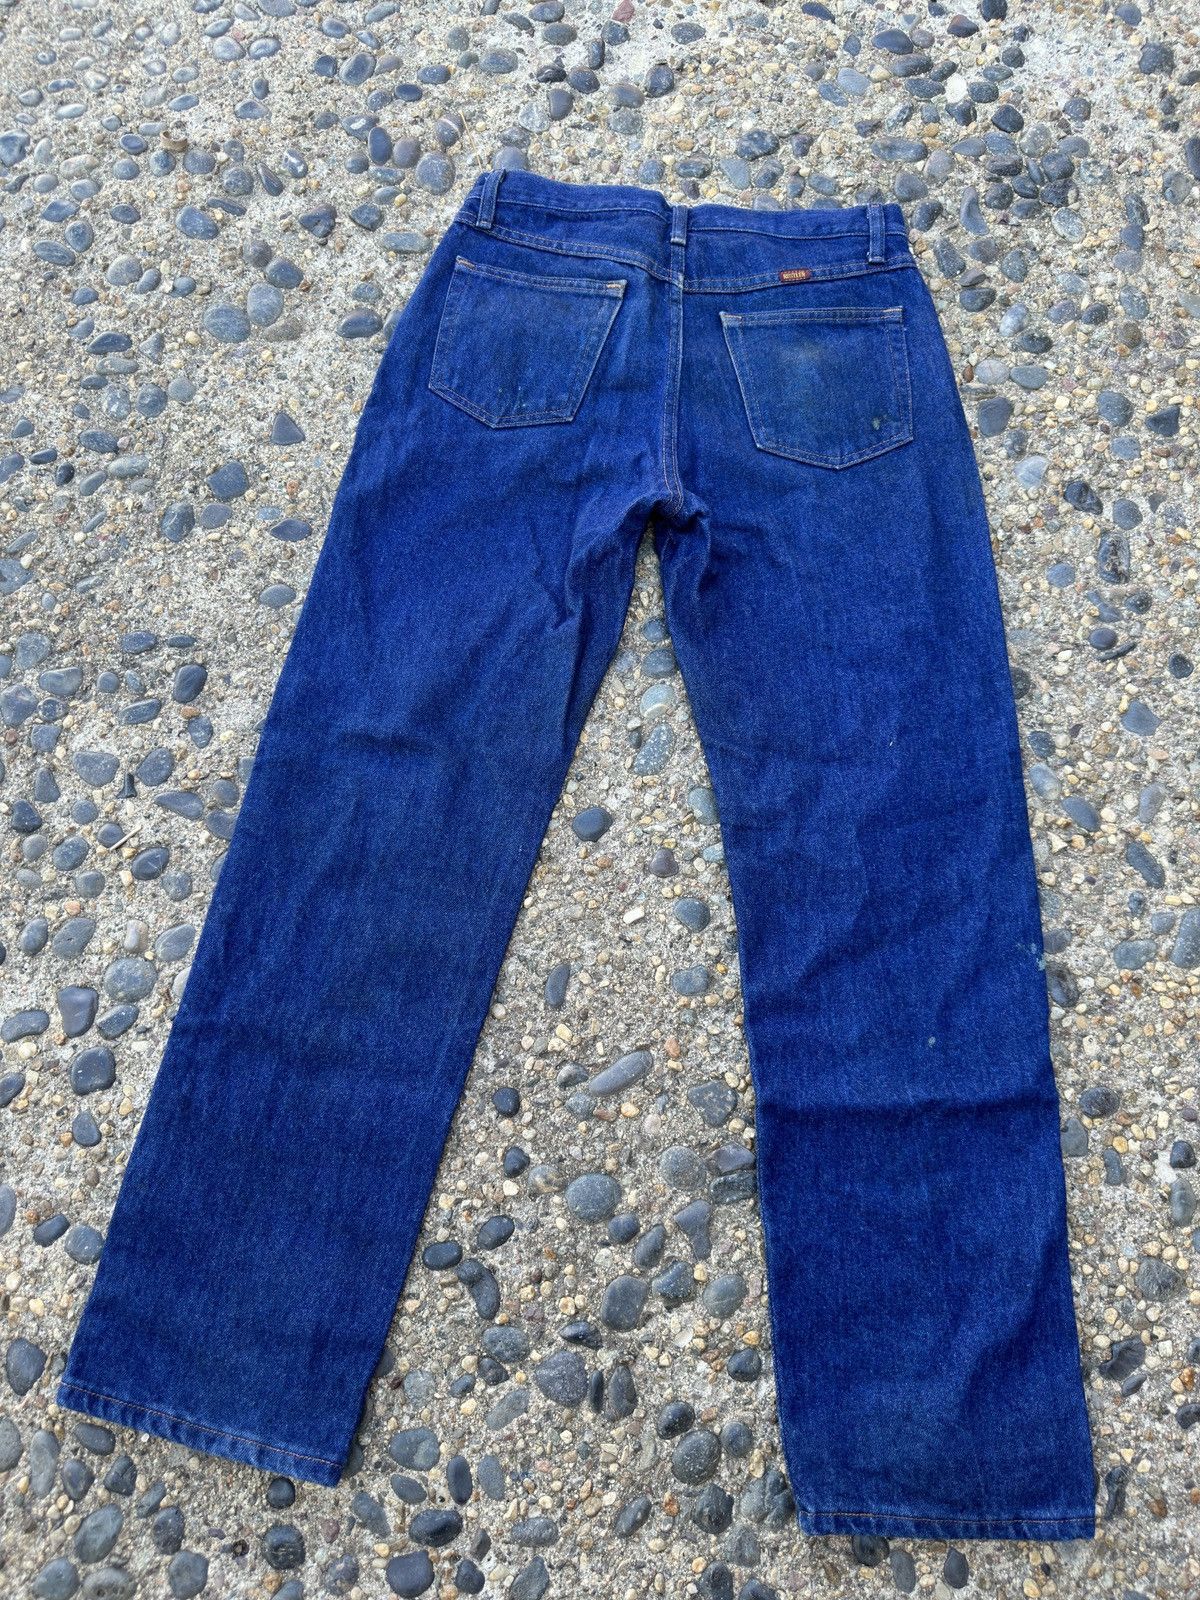 Vintage Vintage Rustler Jeans Size 31x30 Size US 30 / EU 46 - 8 Thumbnail